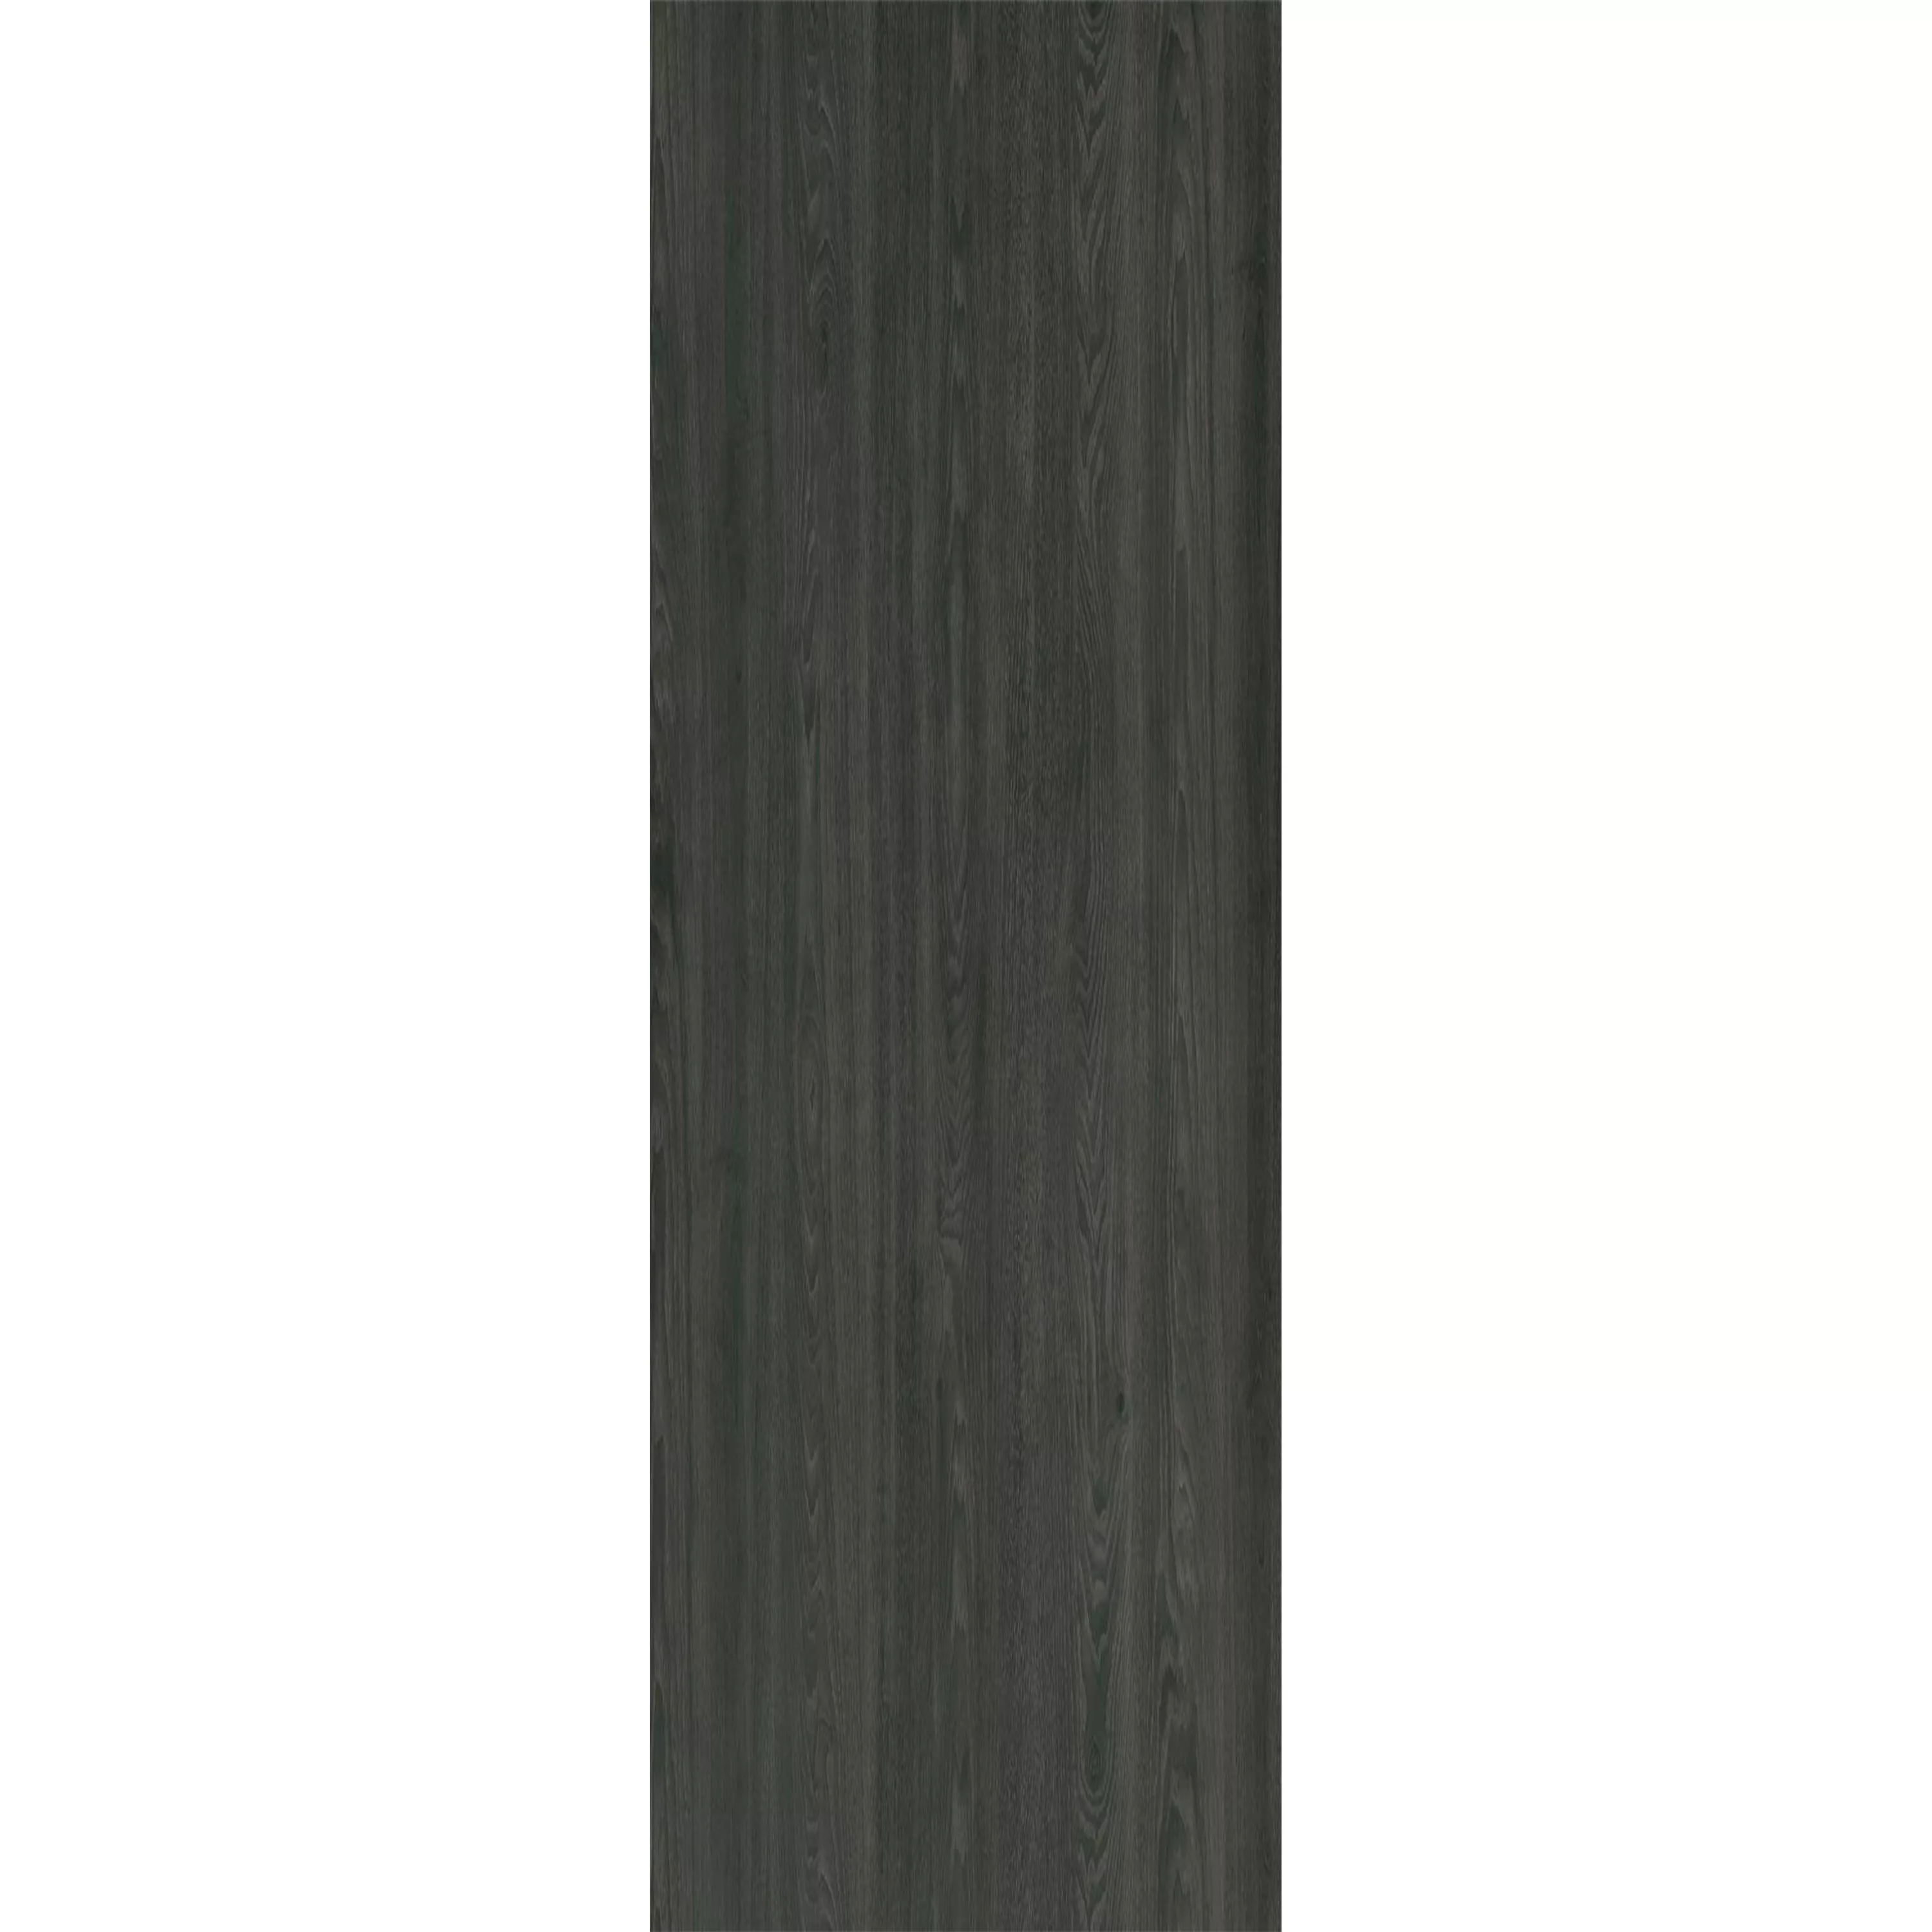 Suelo De Vinilo Sistema De Clic Blackwood Antracita 17,2x121cm